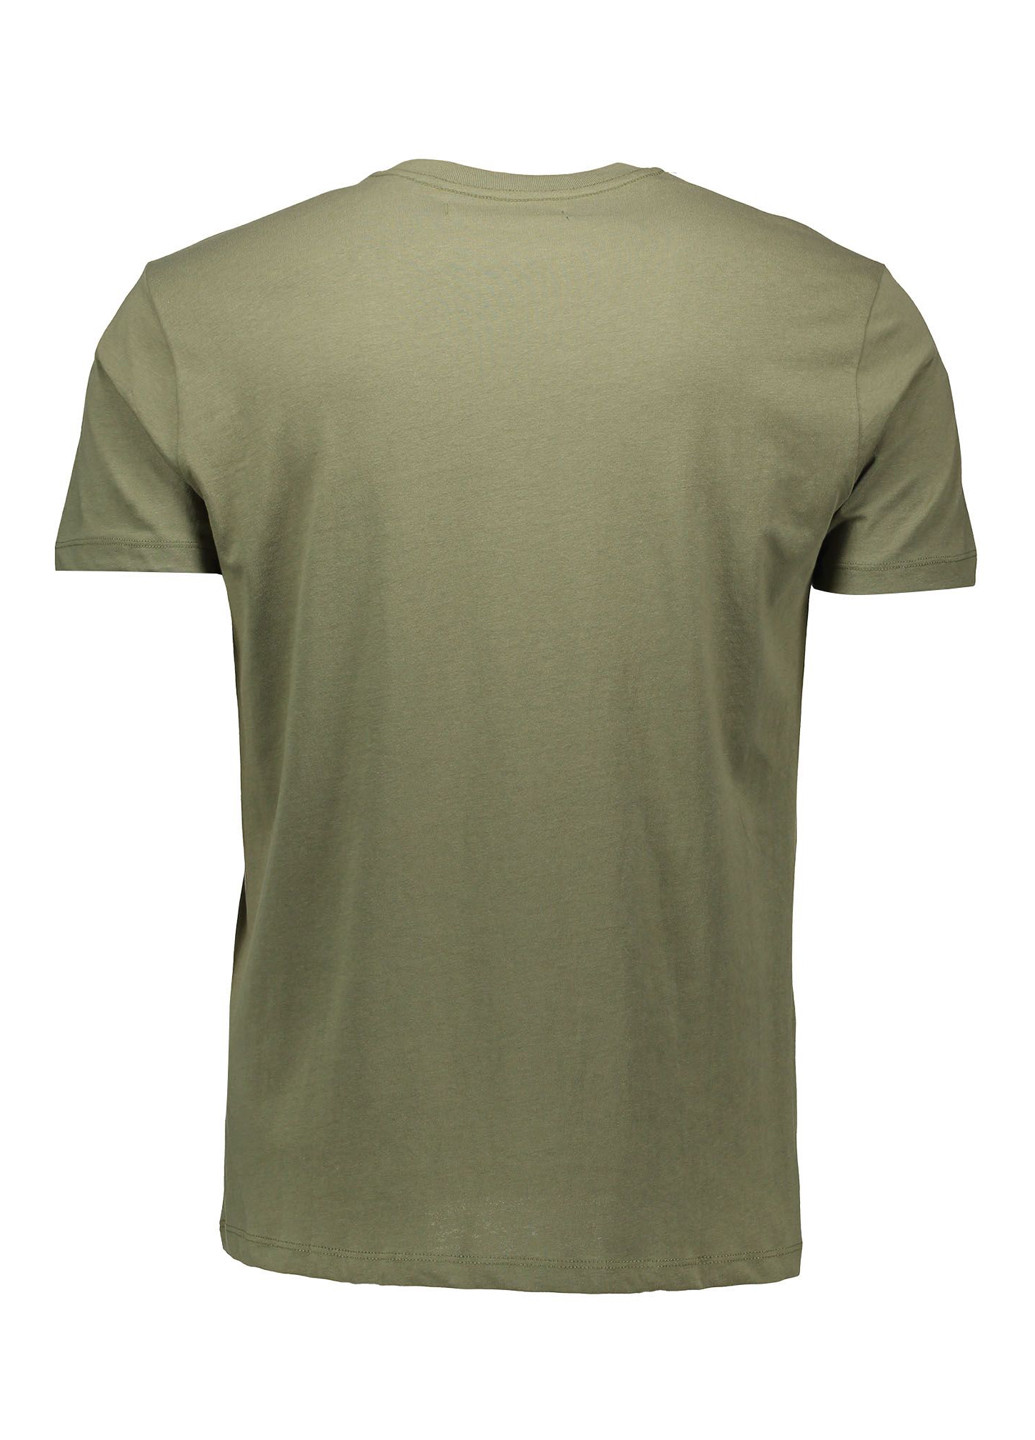 Хакі (оливкова) футболка з коротким рукавом Piazza Italia